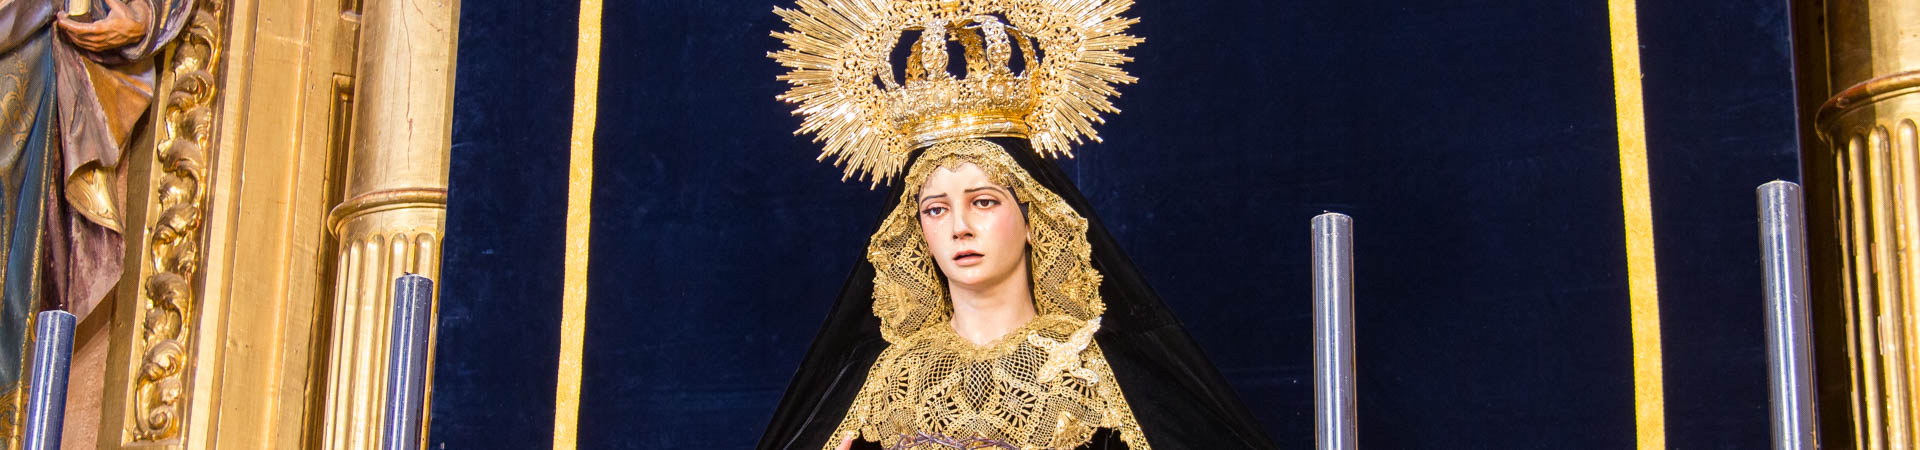 Virgen besapies 2013 cabecera